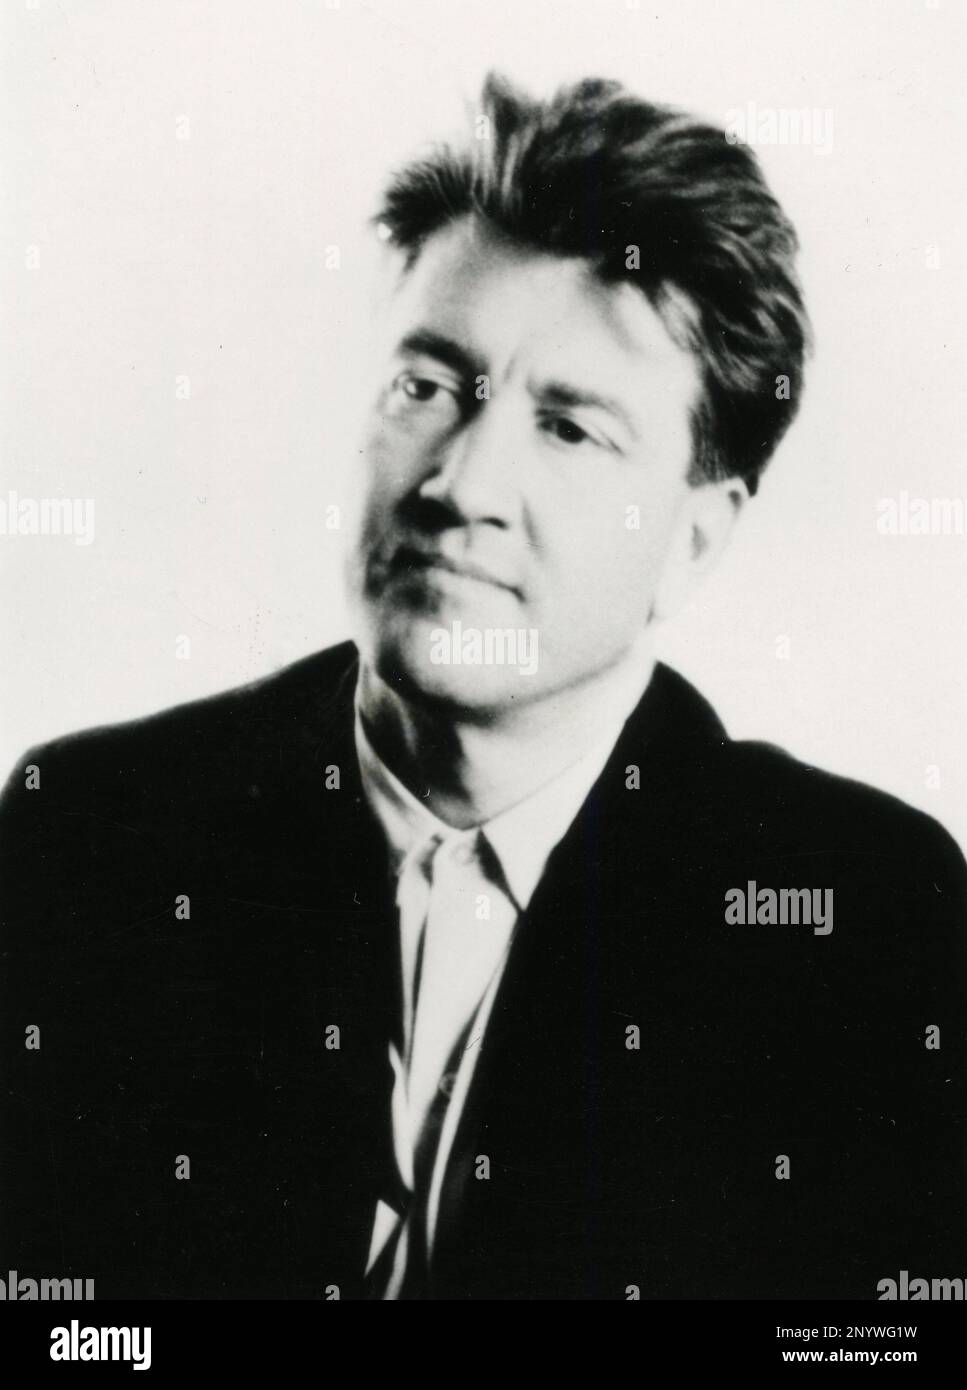 American film director David Lynch, USA 1980s Stock Photo